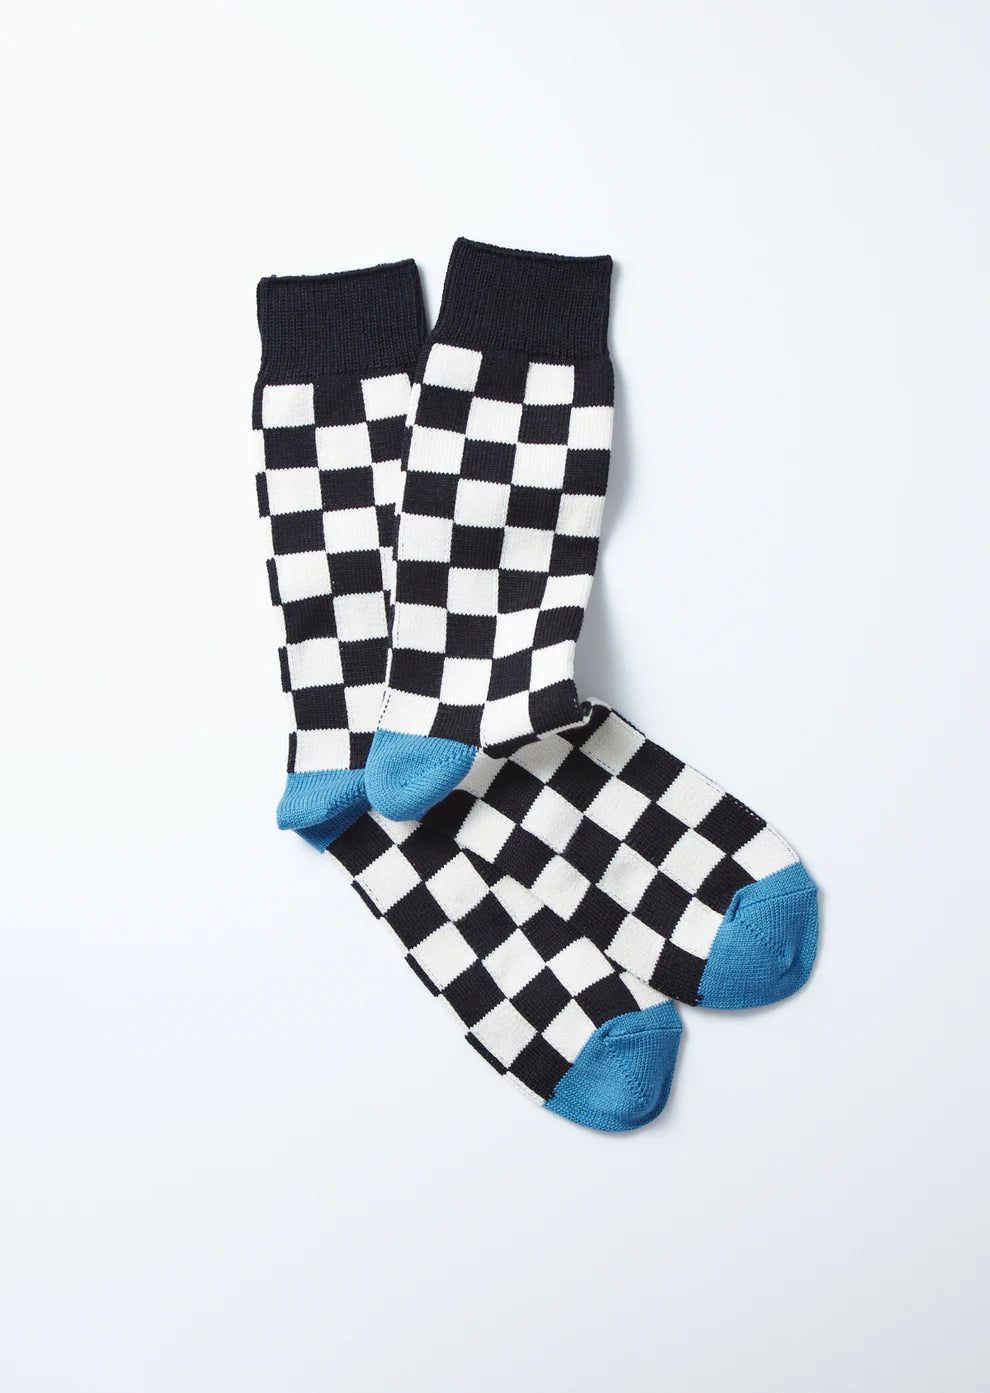 Checkerboard Crew Socks  RoToTo Black/Ivory/Light Blue L 